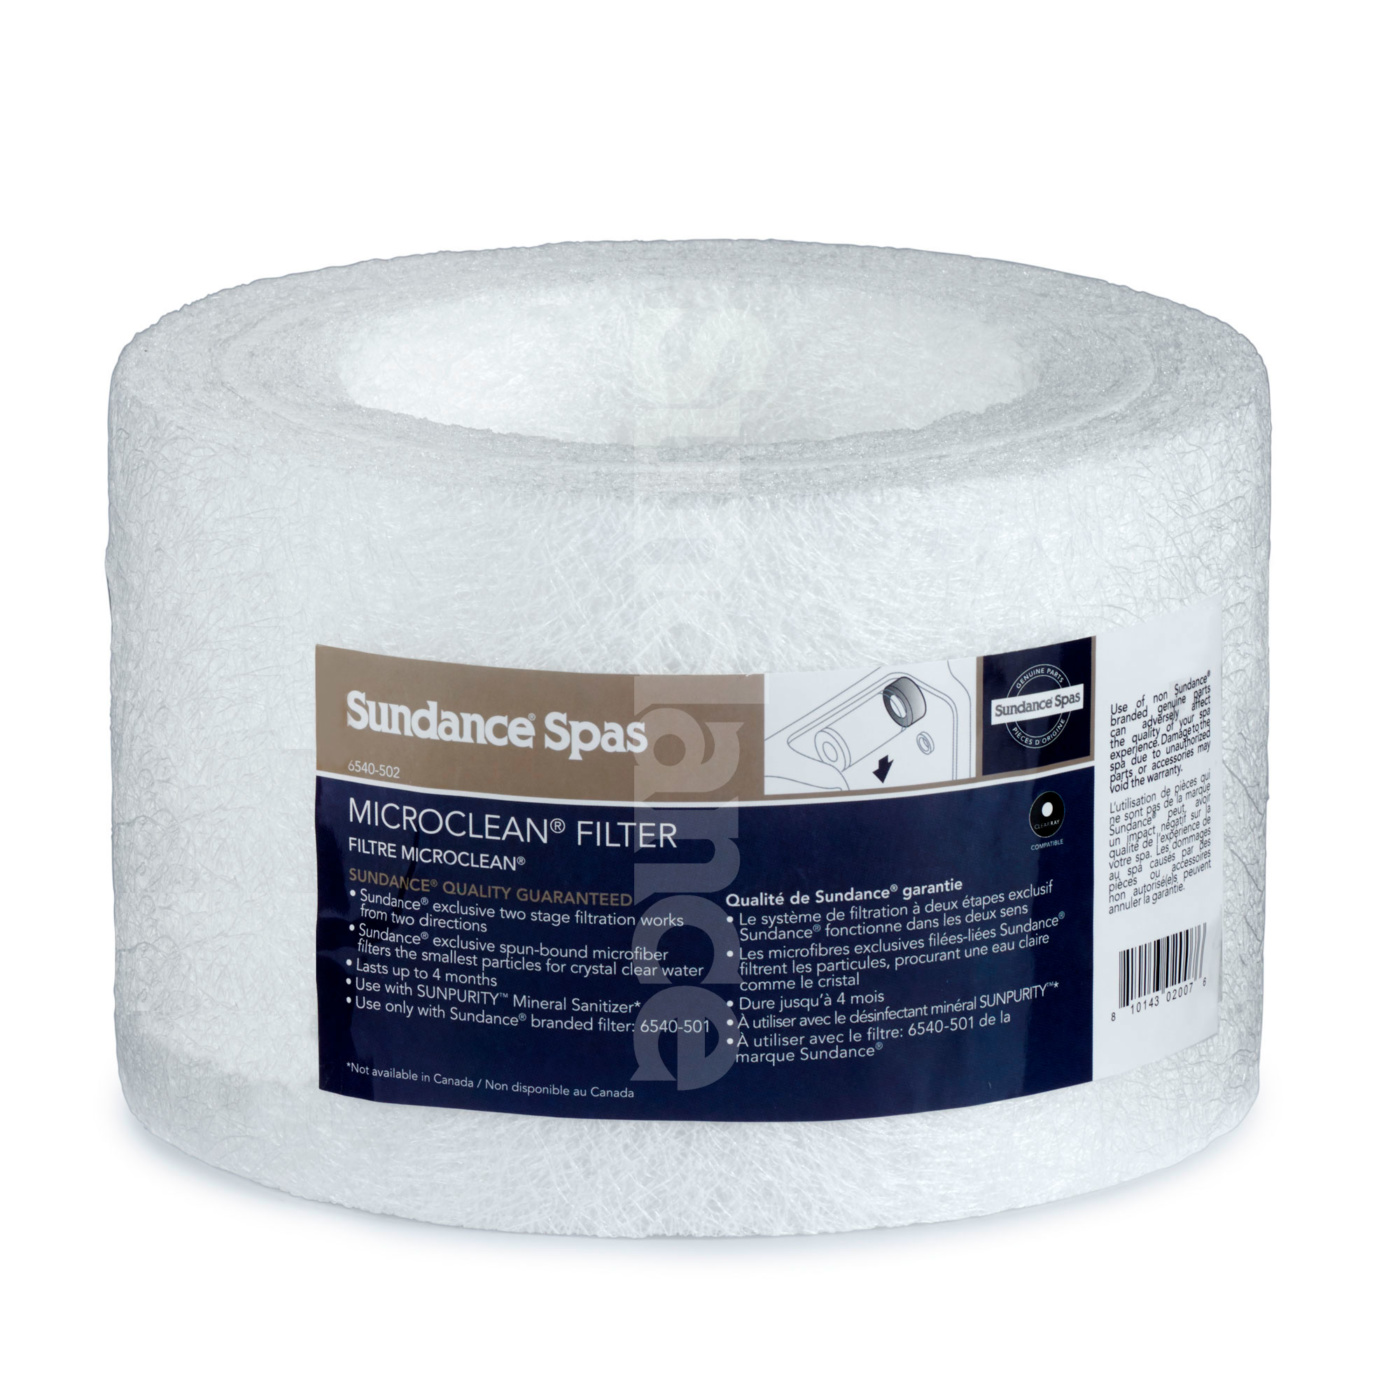 Sundance massasjebad filter-6540-502